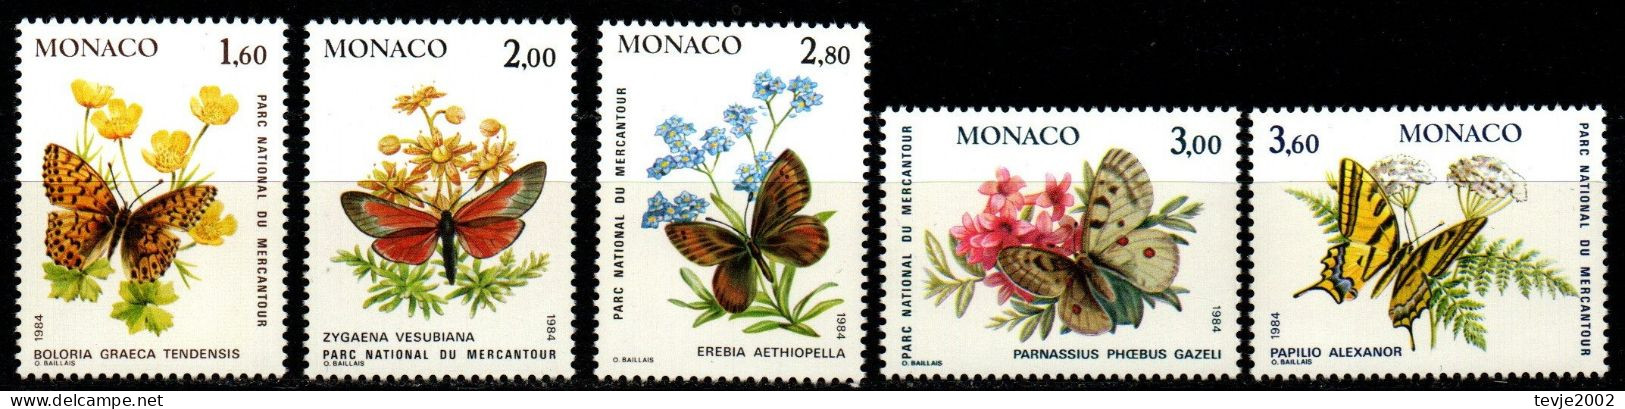 Monaco 1984 - Mi.Nr. 1624 - 1628 - Postfrisch MNH - Tiere Animals Schmetterlinge Butterflies - Schmetterlinge